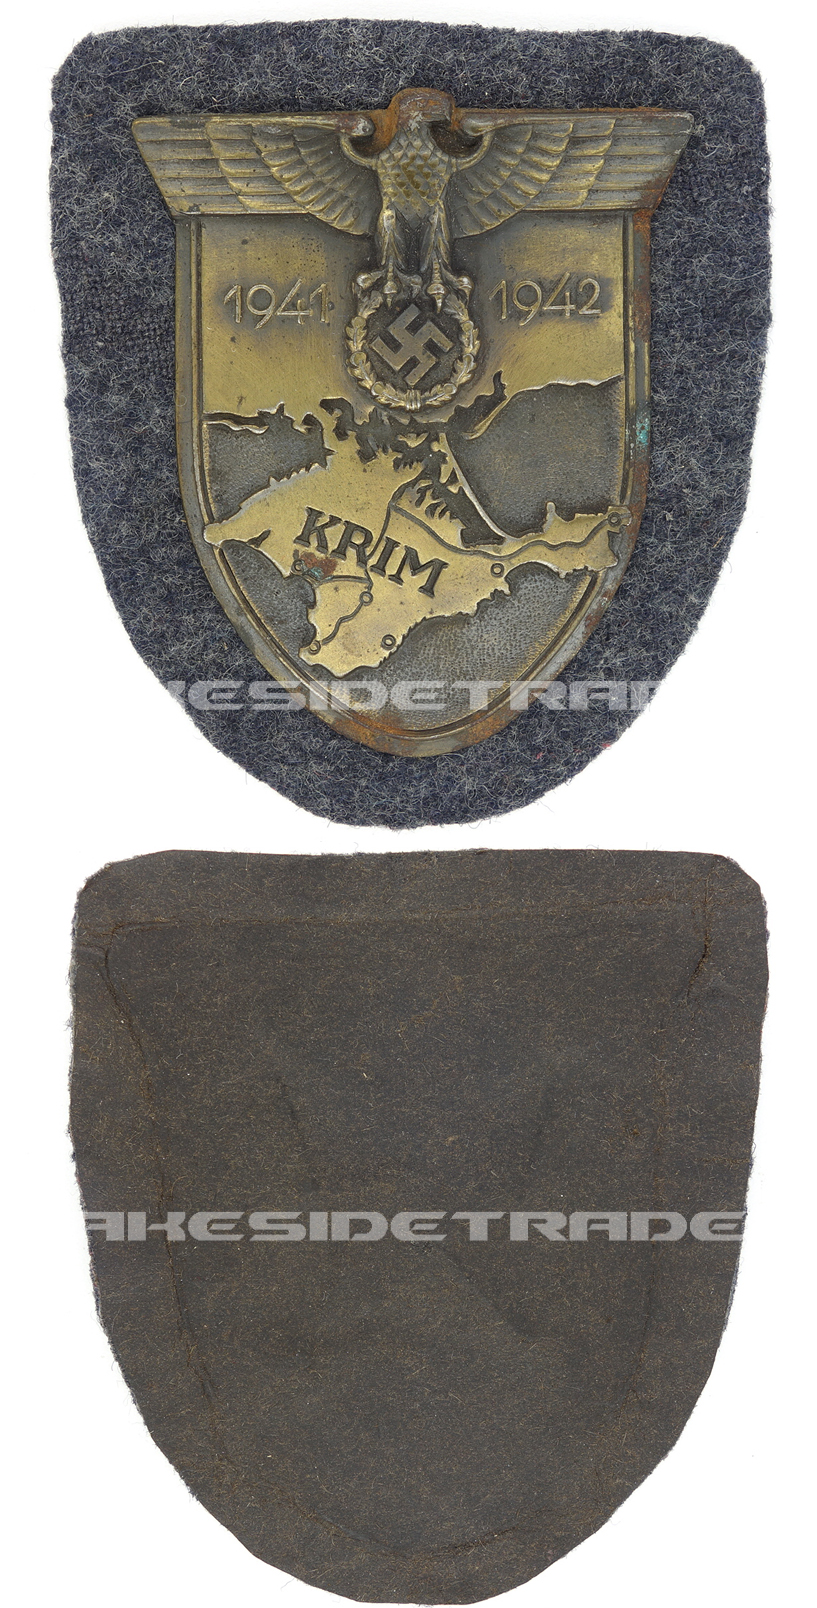 Luftwaffe Krim Campaign Arm Shield